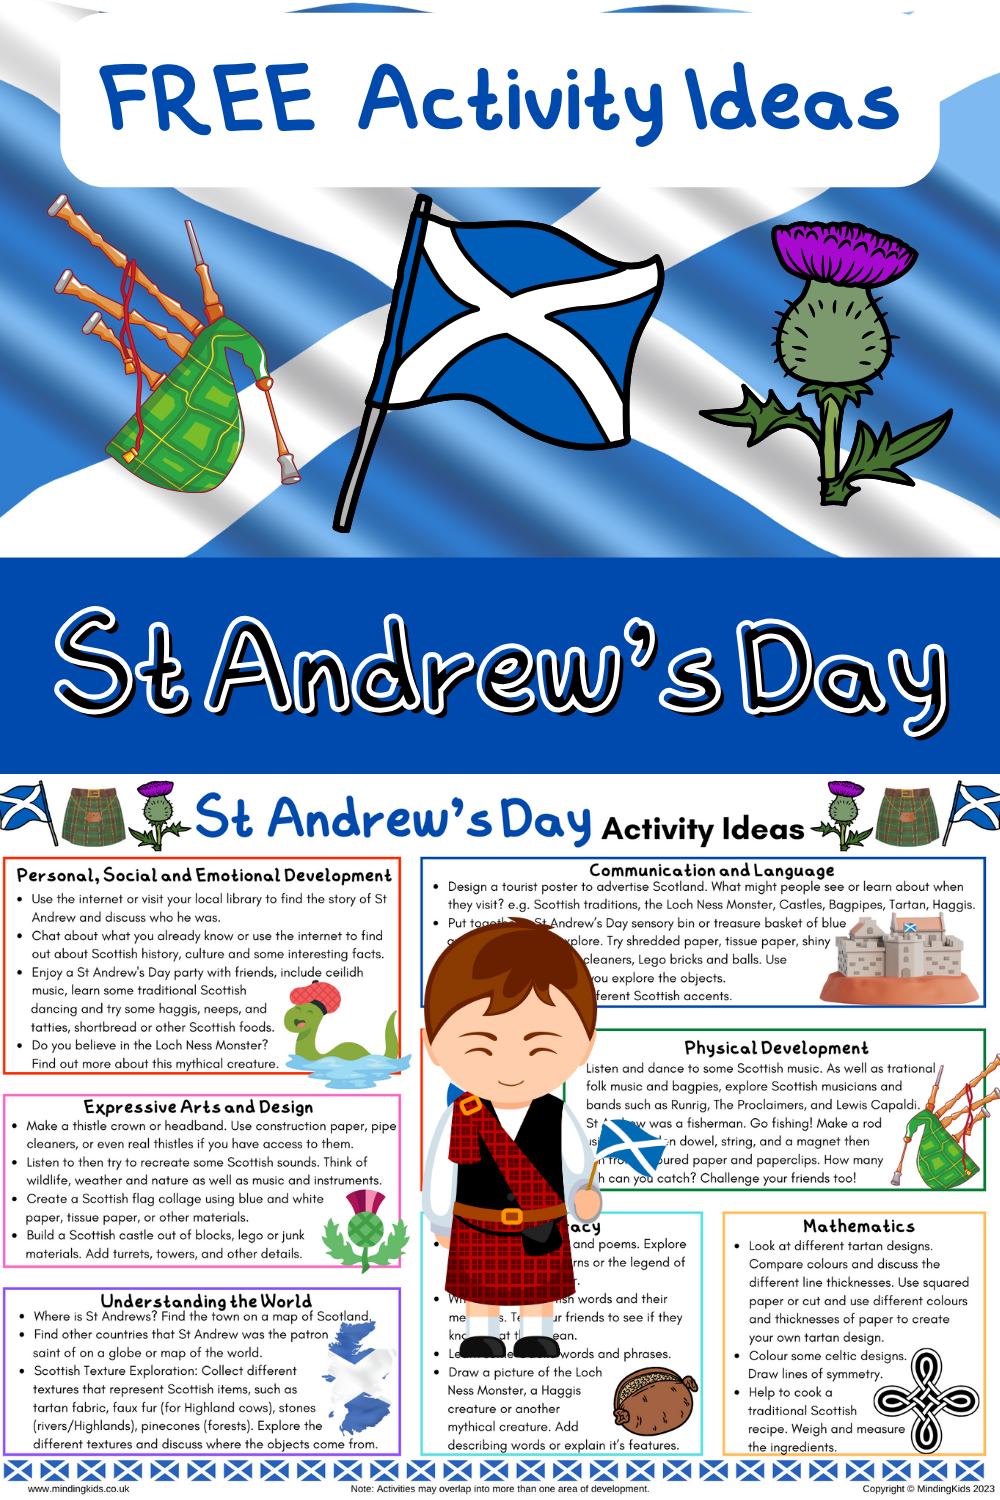 St Andrew's Day Activity Ideas -PINTEREST